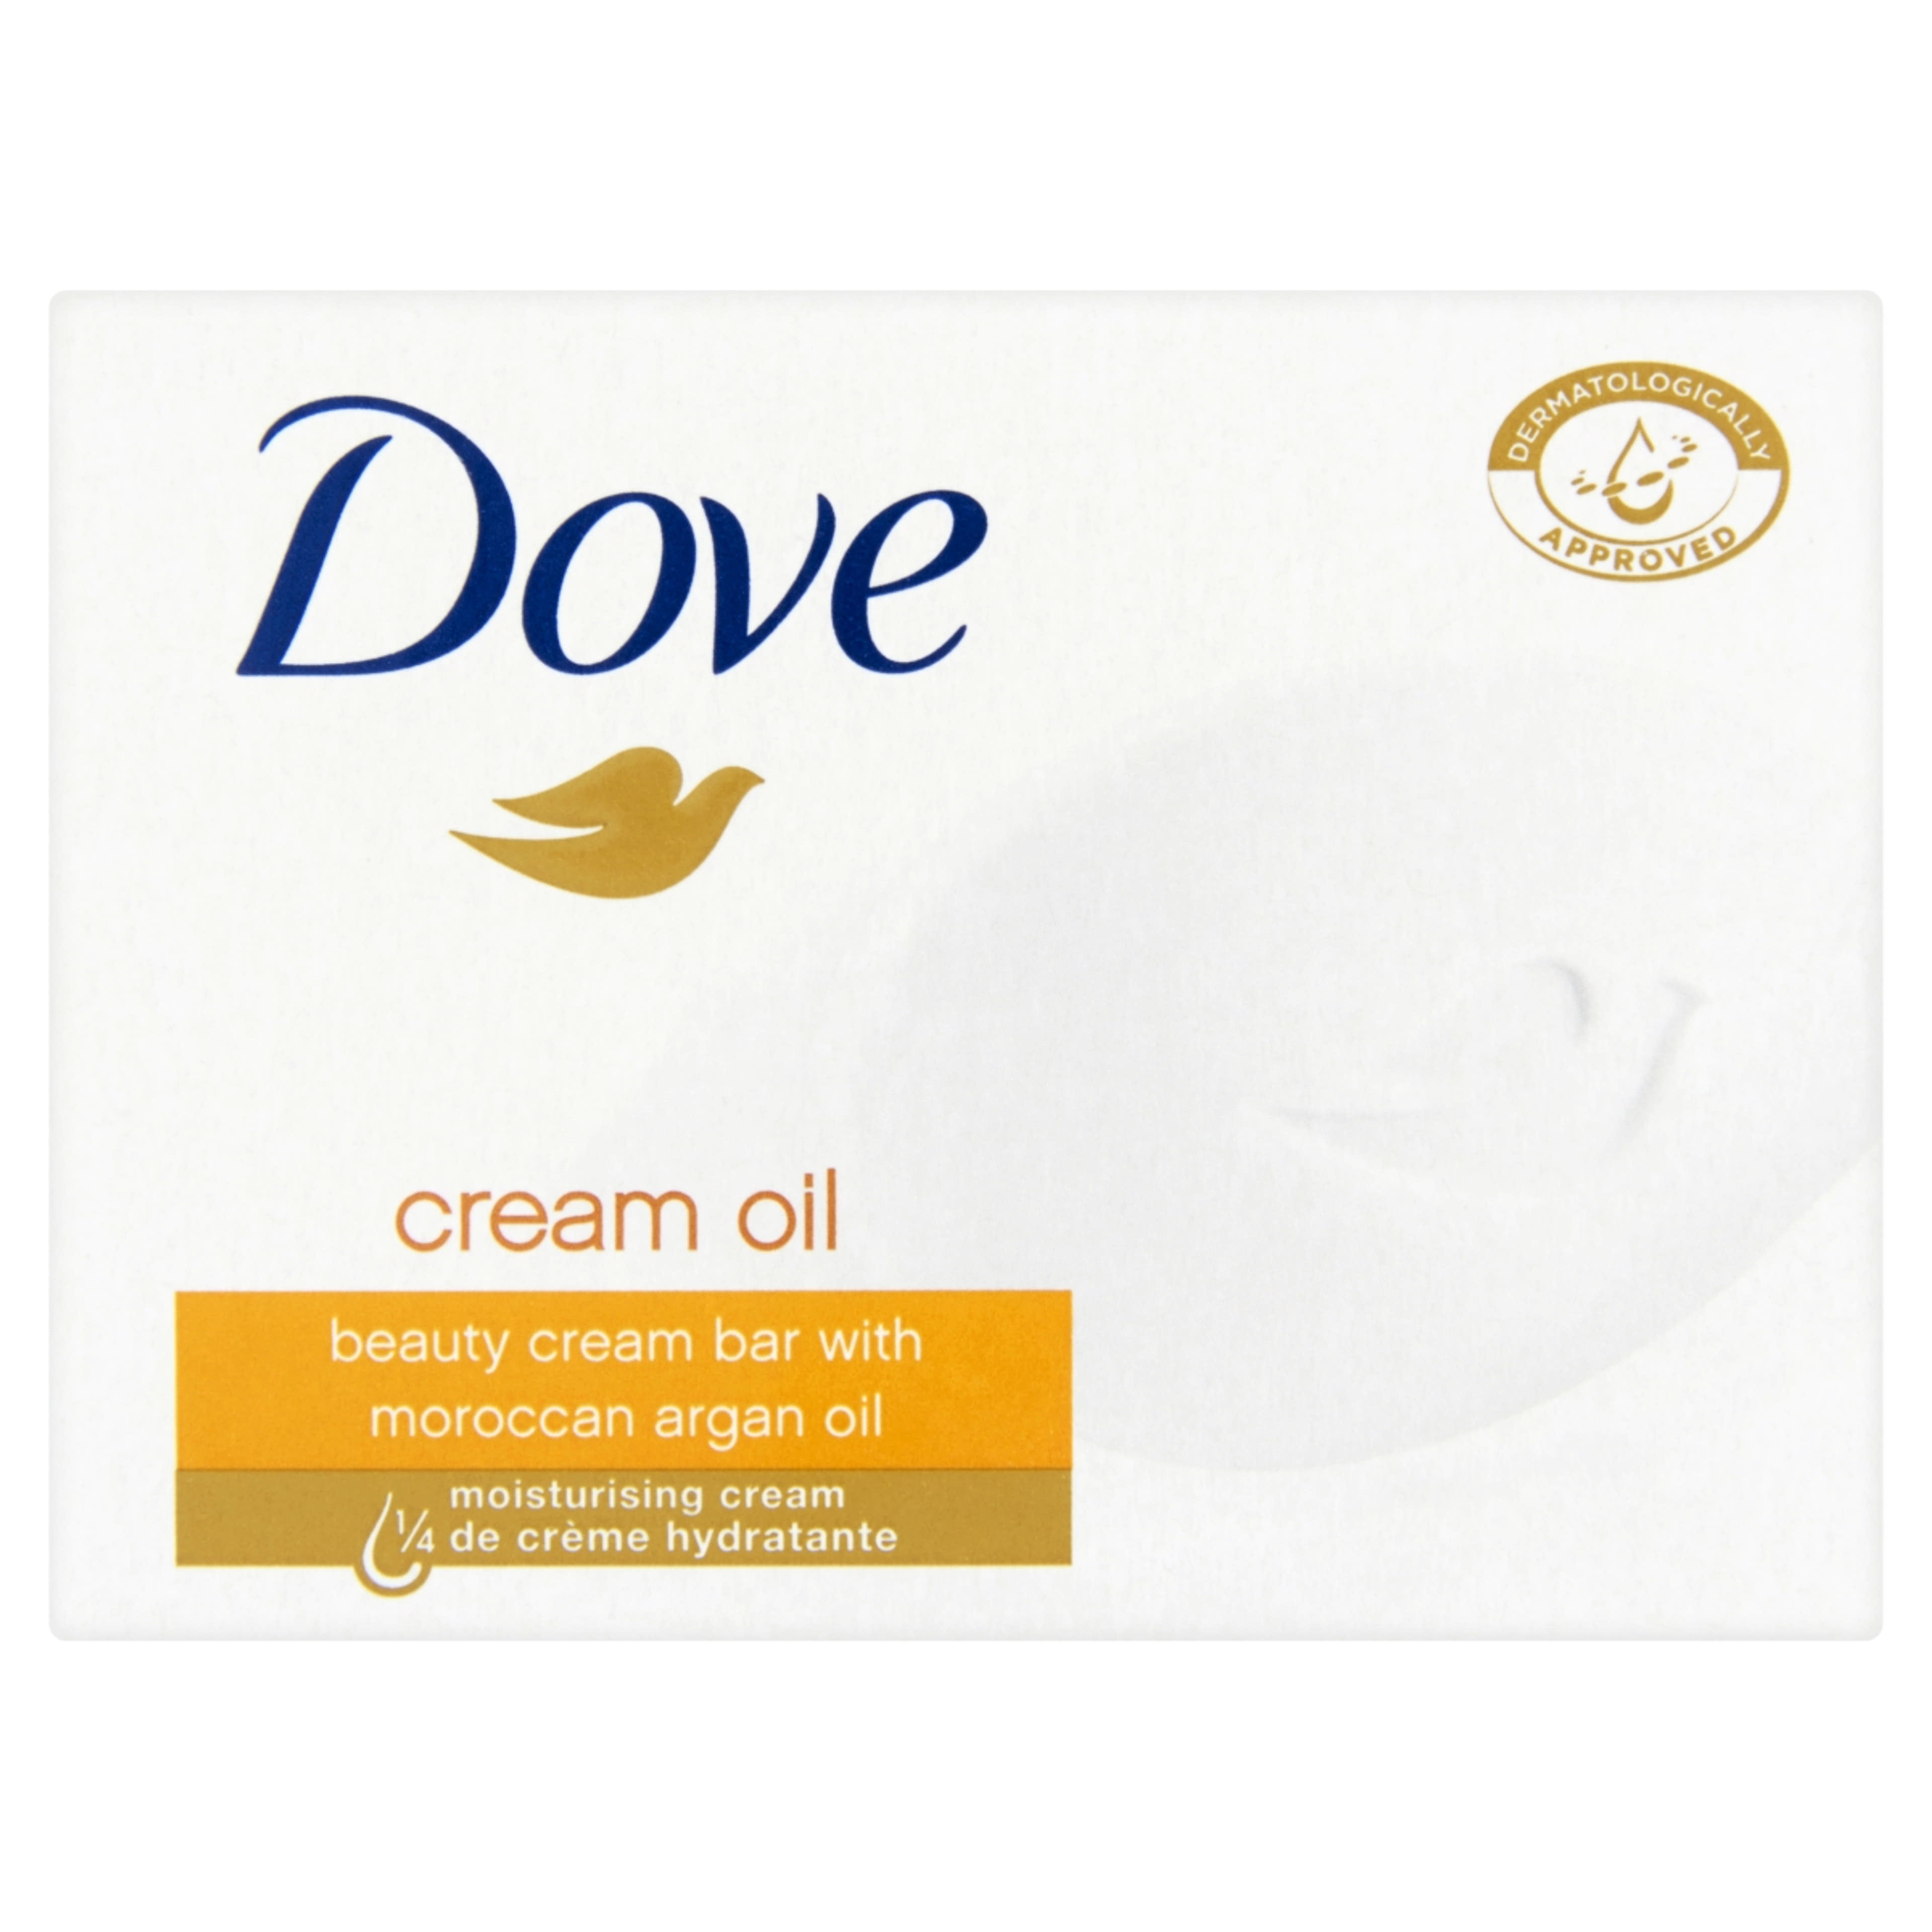 Dove Cream Oil krémszappan - 100 g-1